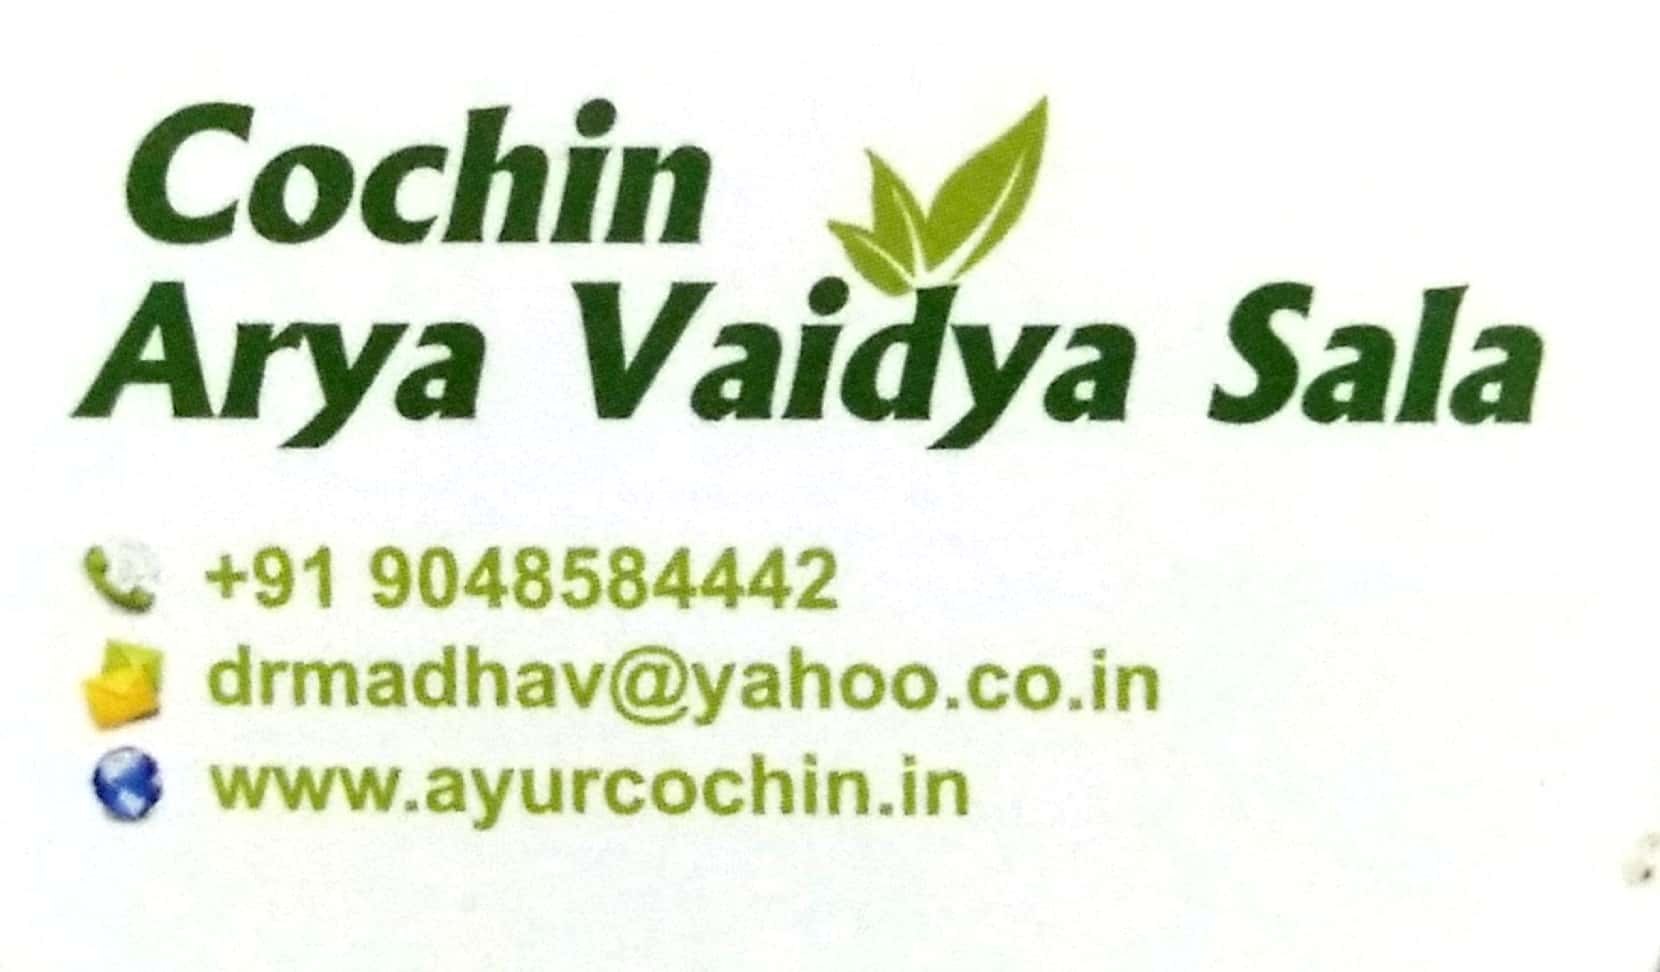 COCHIN ARYA VAIDYA SALA, AYURVEDIC HOSPITAL,  service in Thrippunithura, Ernakulam